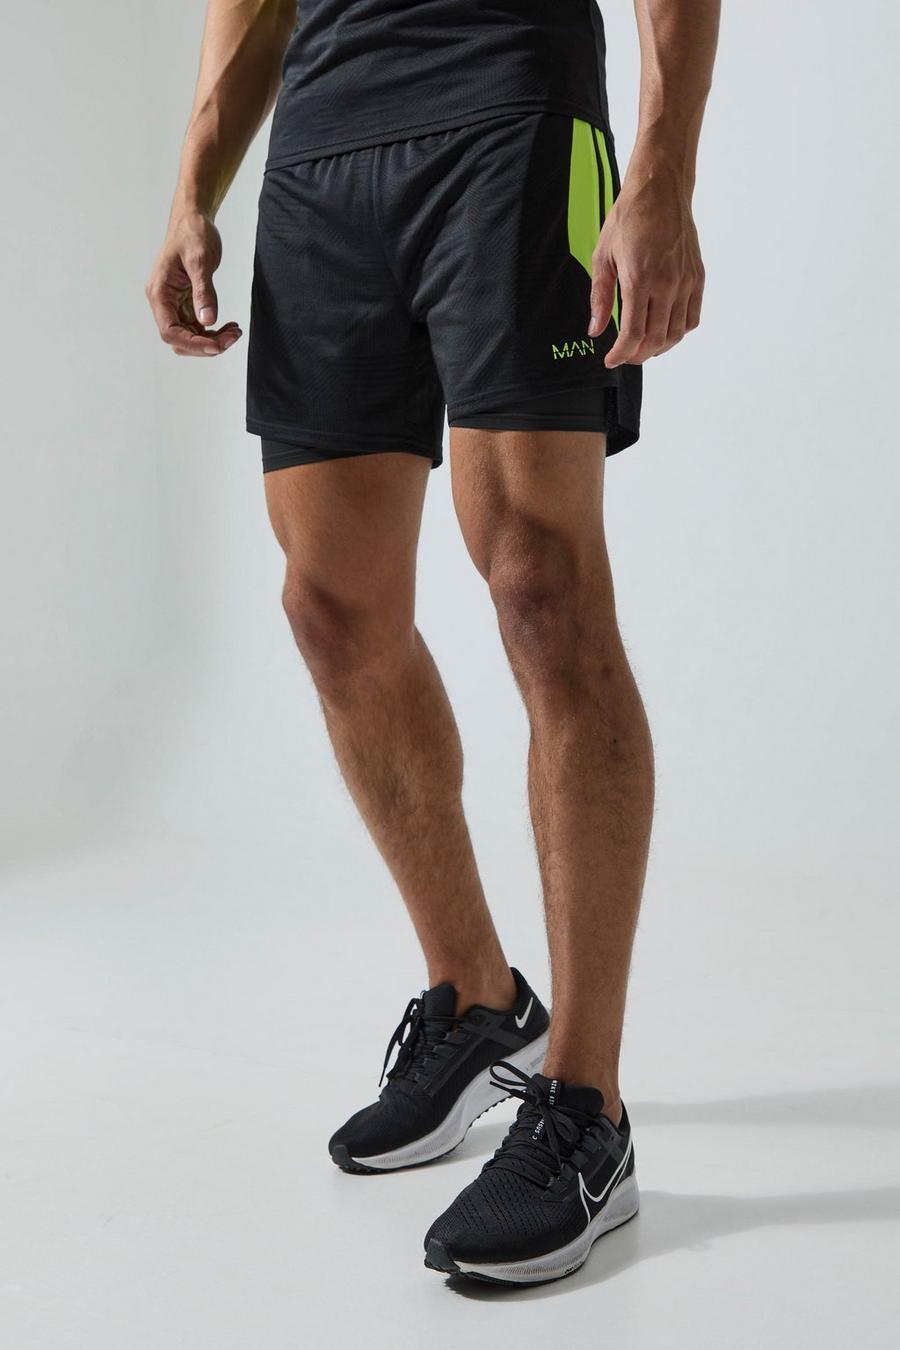 Man Active Jacquard 2-in-1 Shorts, Black